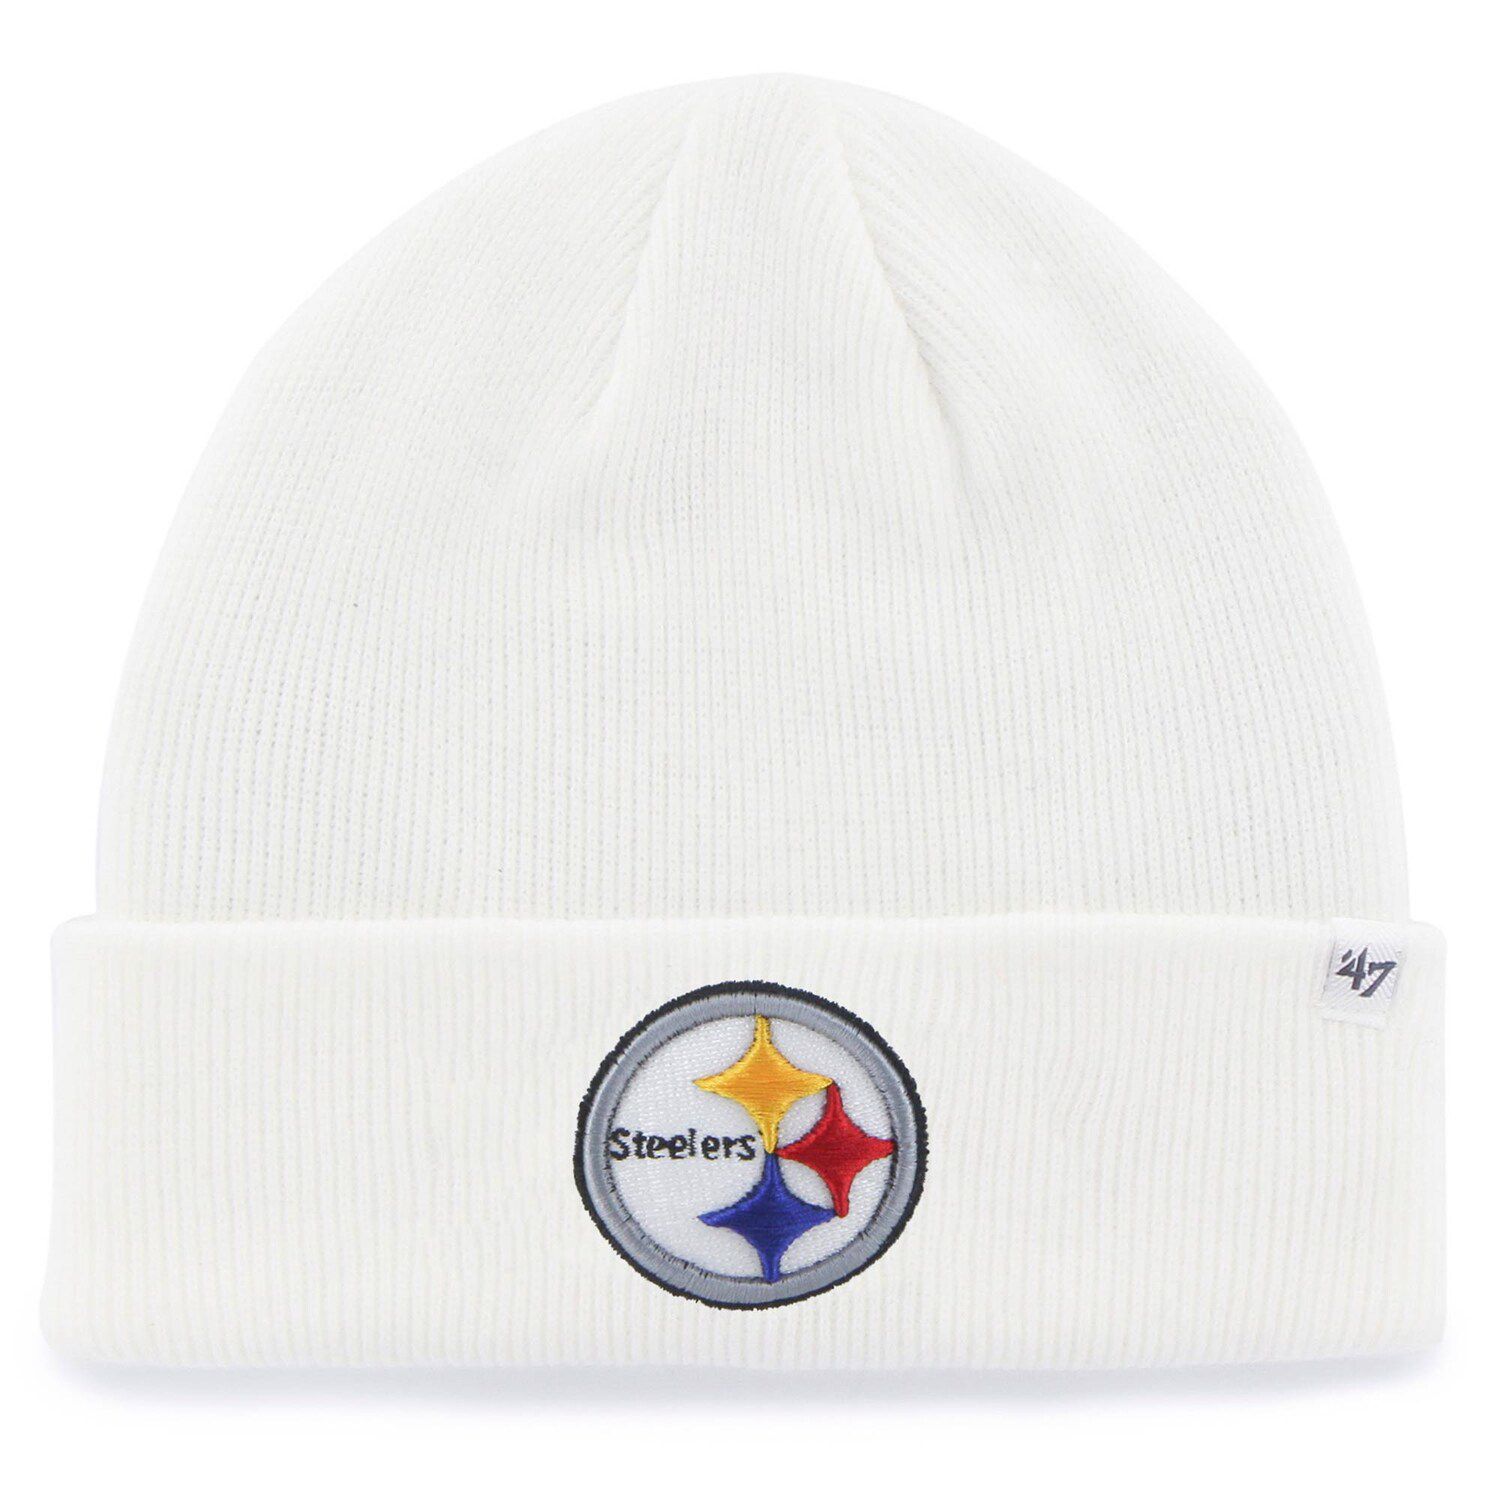 Мужская базовая вязаная шапка среднего размера '47 Pittsburgh Steelers белого цвета с манжетами мужская базовая вязаная шапка с манжетами 47 baltimore ravens среднего размера фиолетового цвета 47 brand